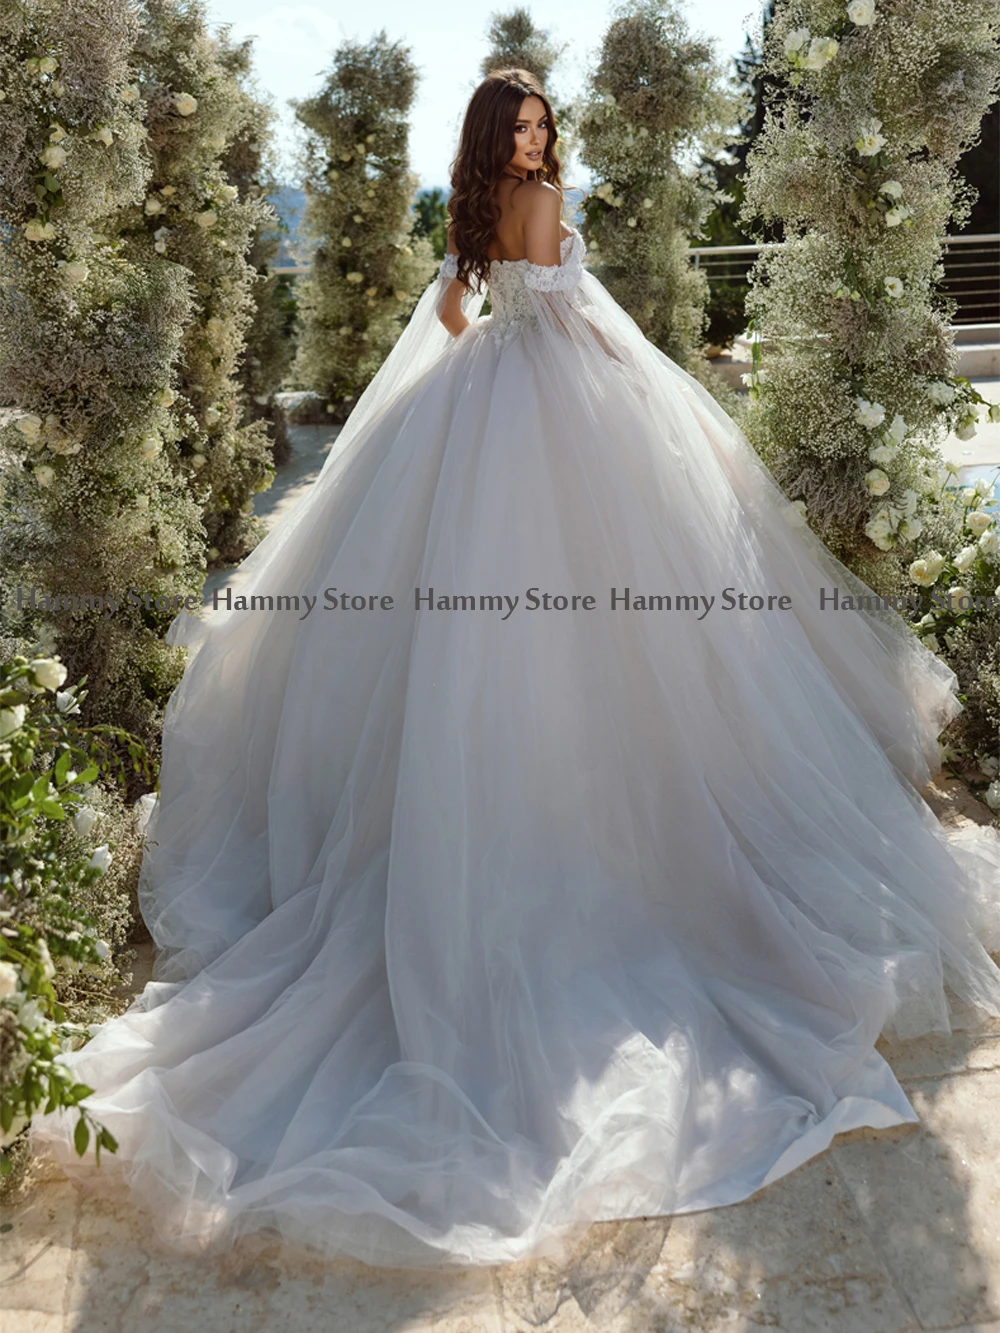 Vestido de noiva da princesa vestido de baile brilhante glitter tule fora  do ombro vestidos de noiva em camadas robe de mariage - AliExpress